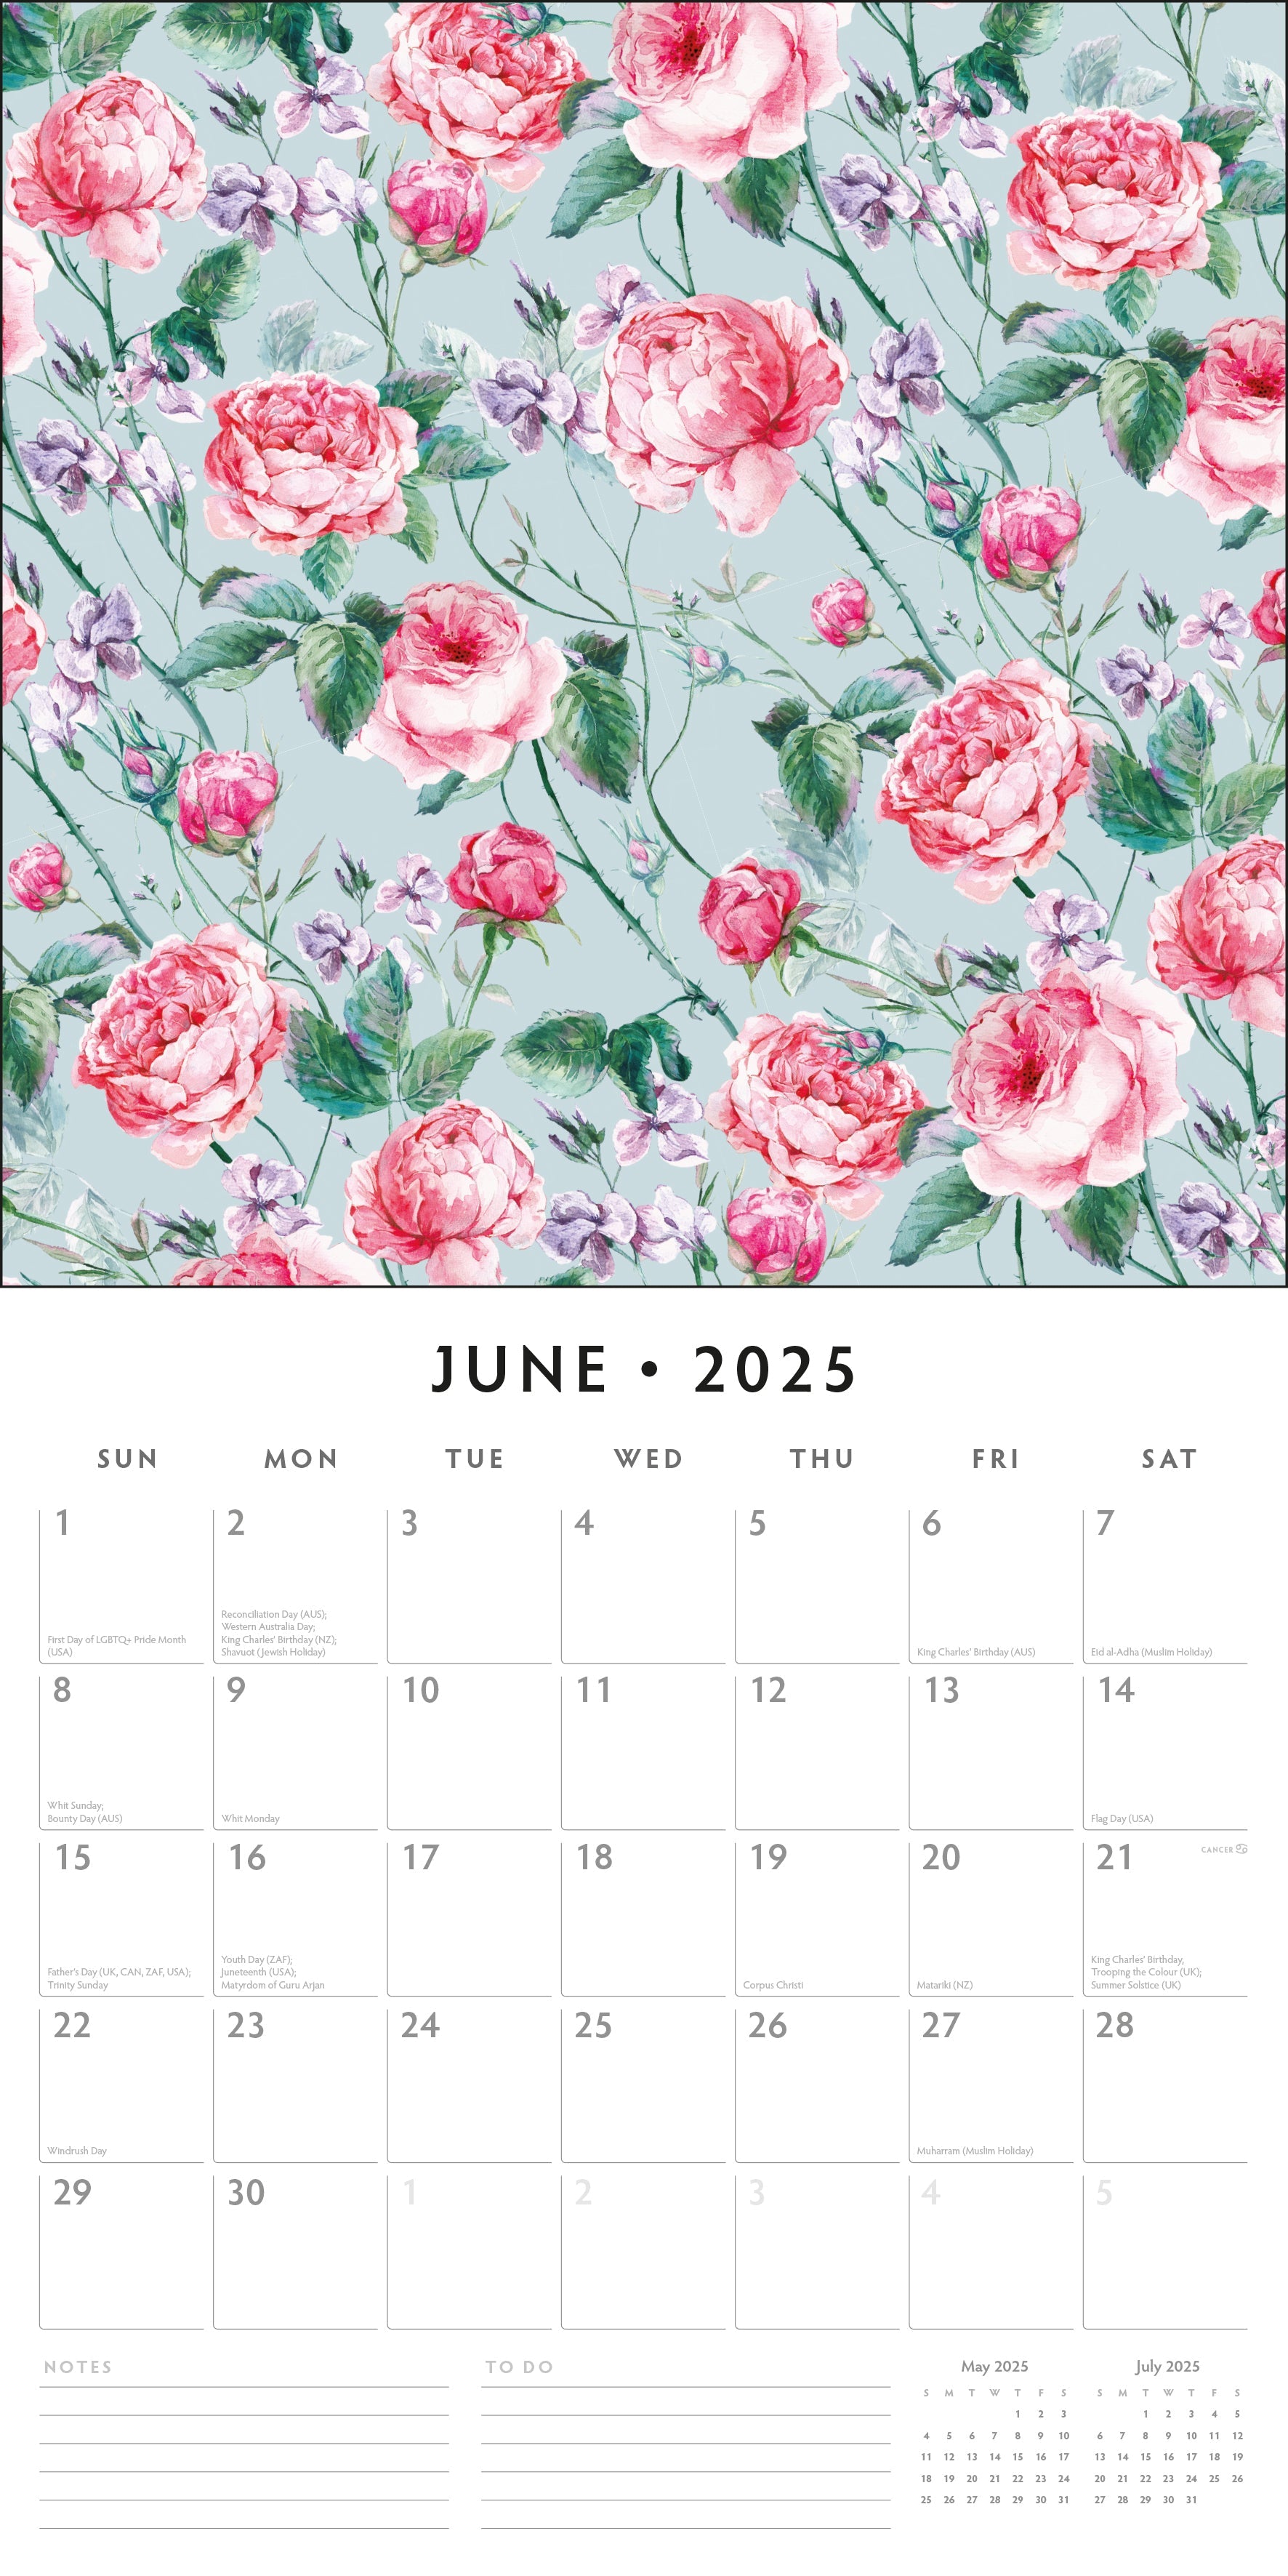 2025 Vintage Roses - Square Wall Calendar